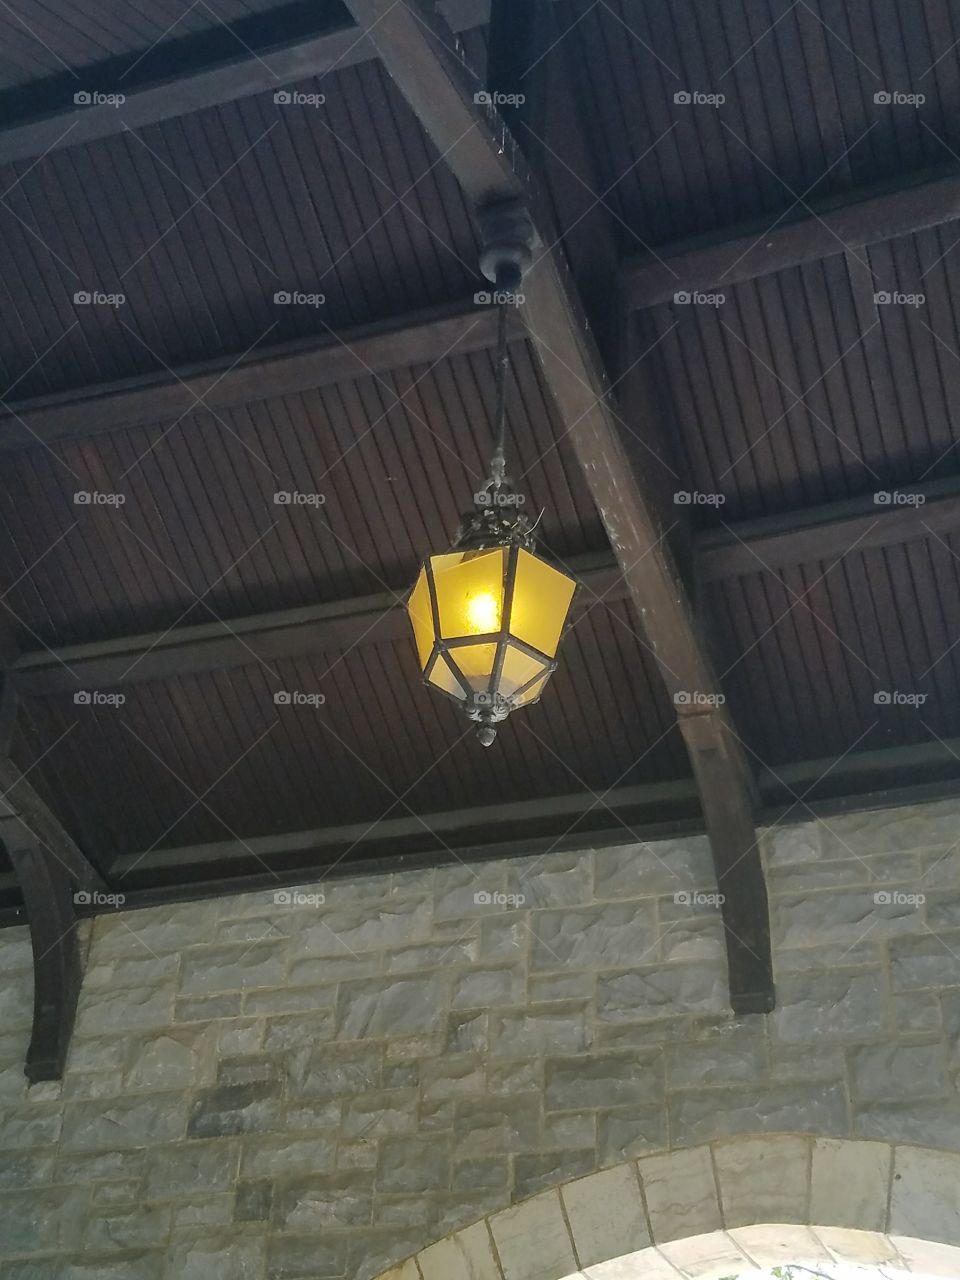 A outdoor chain lamp outside a castle entrance.